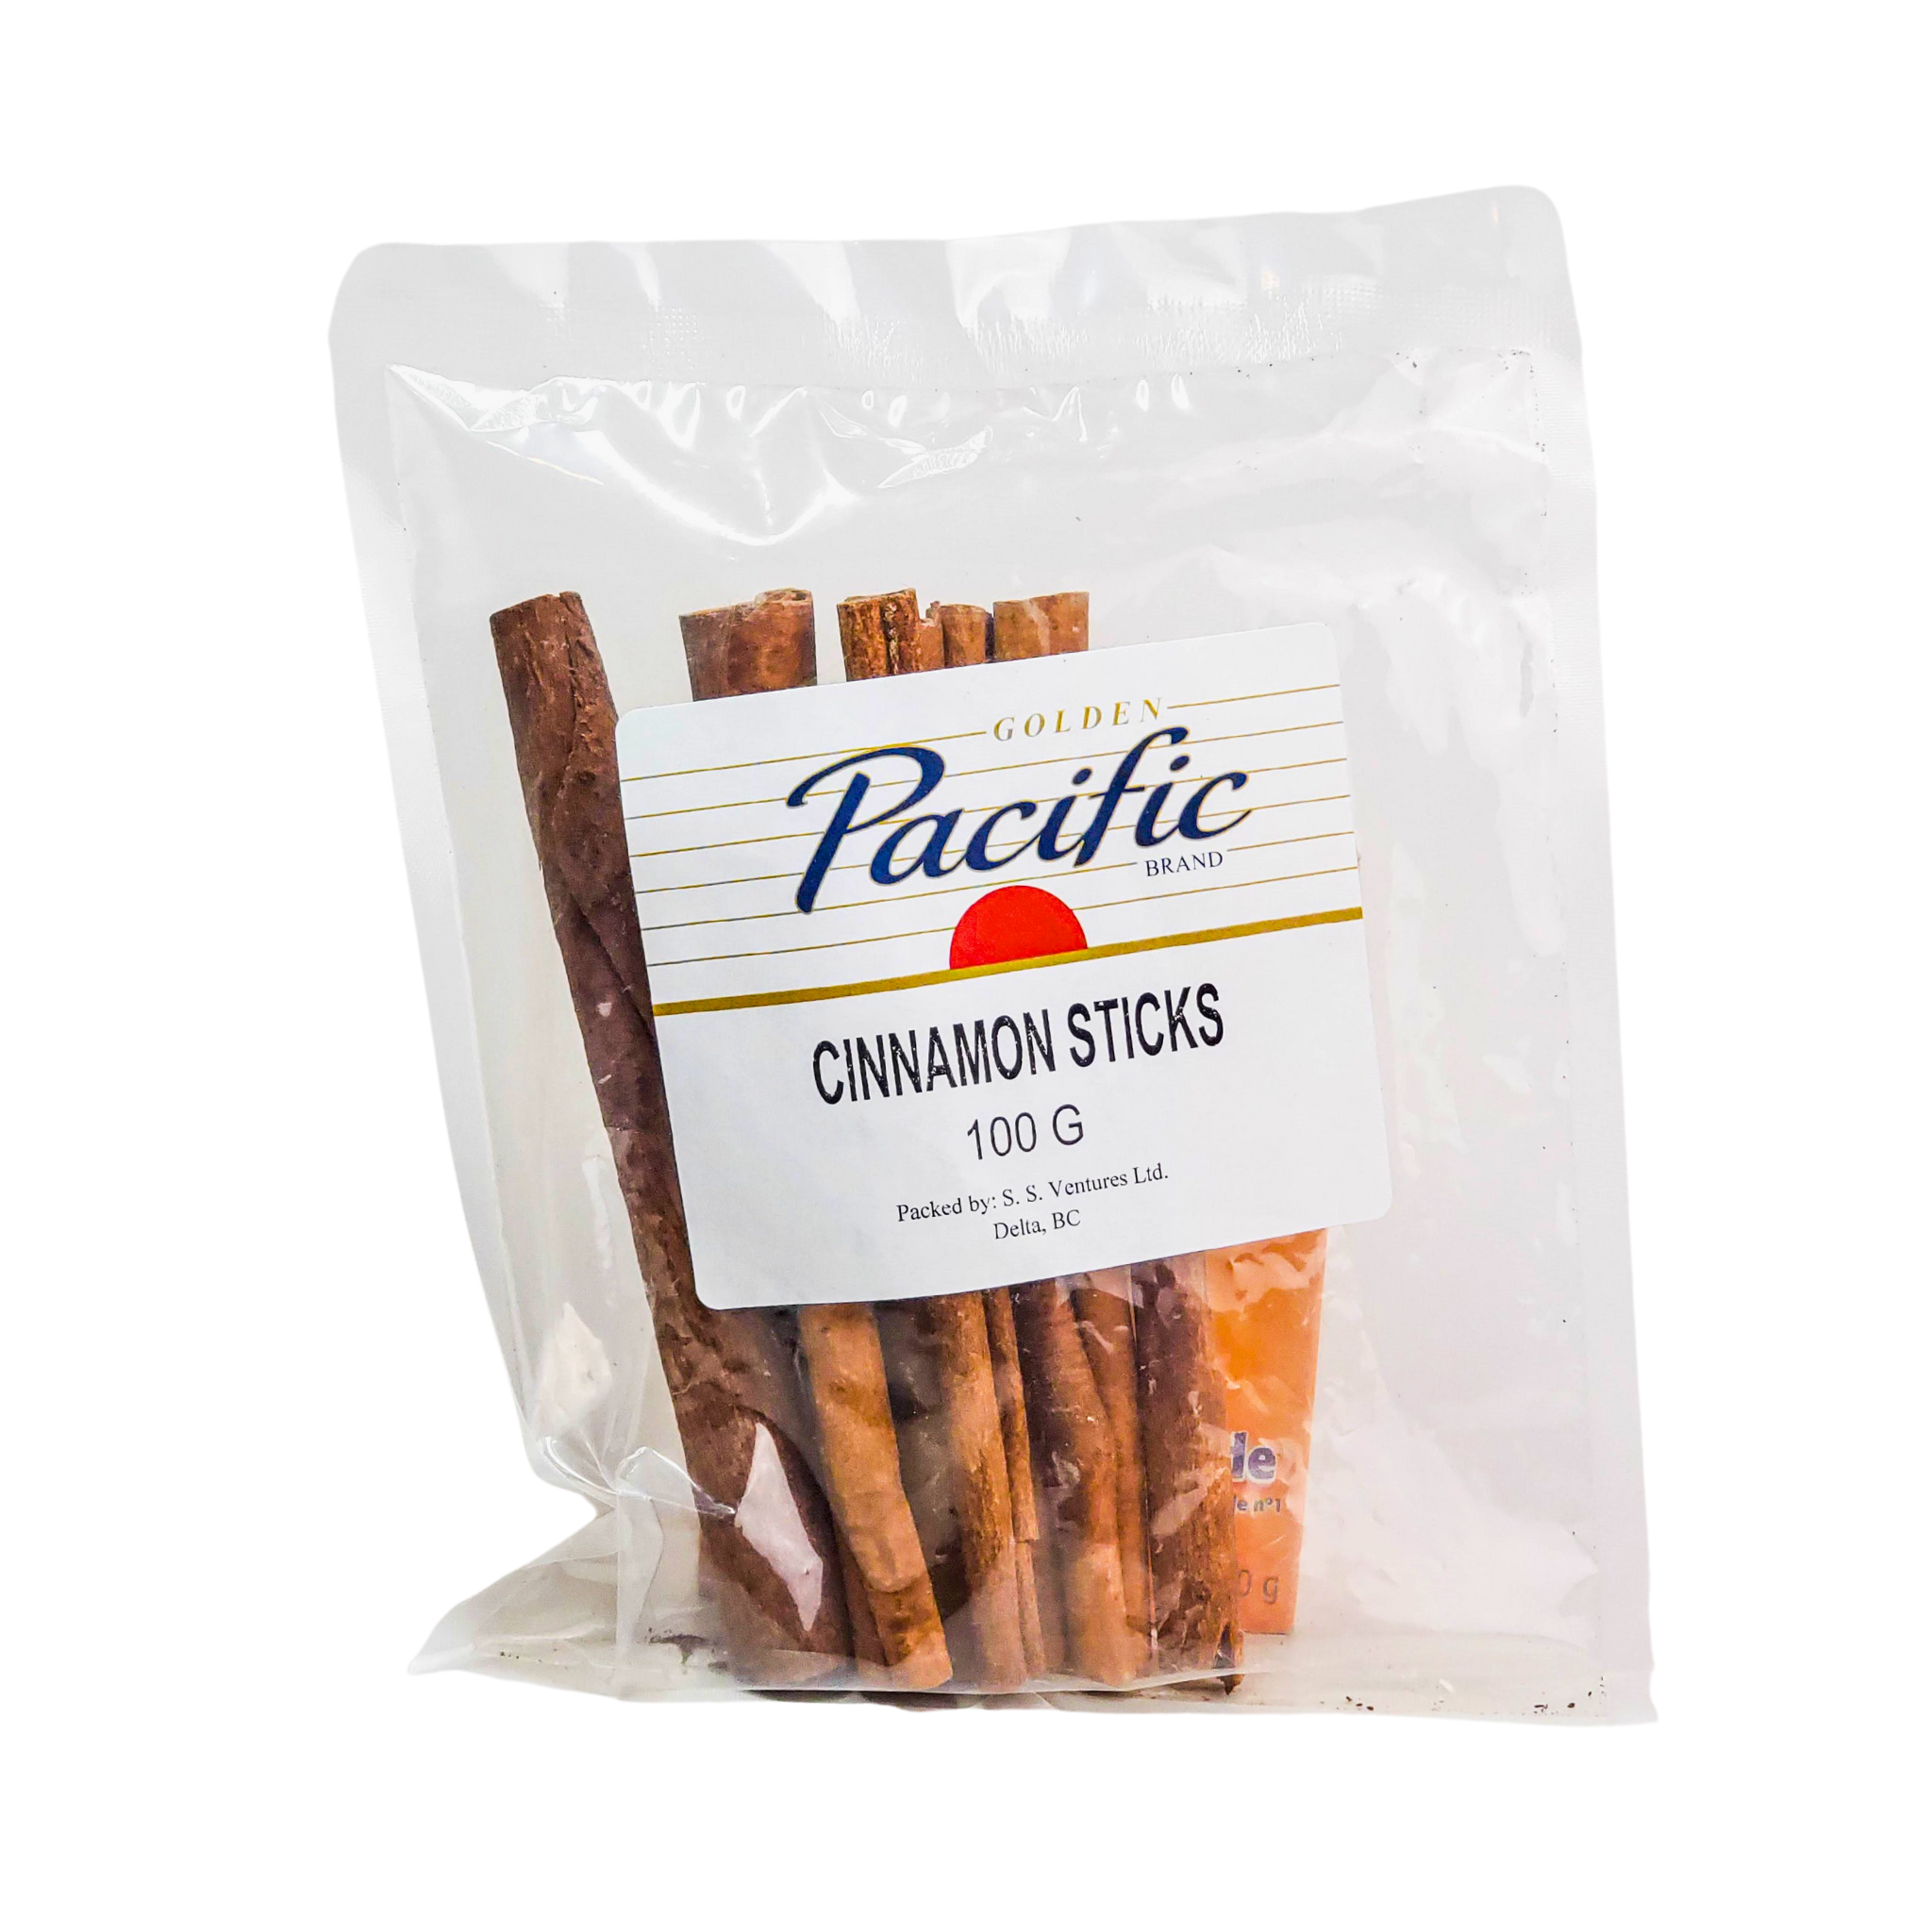 Golden Pacific Brand Cinnamon Sticks 100g